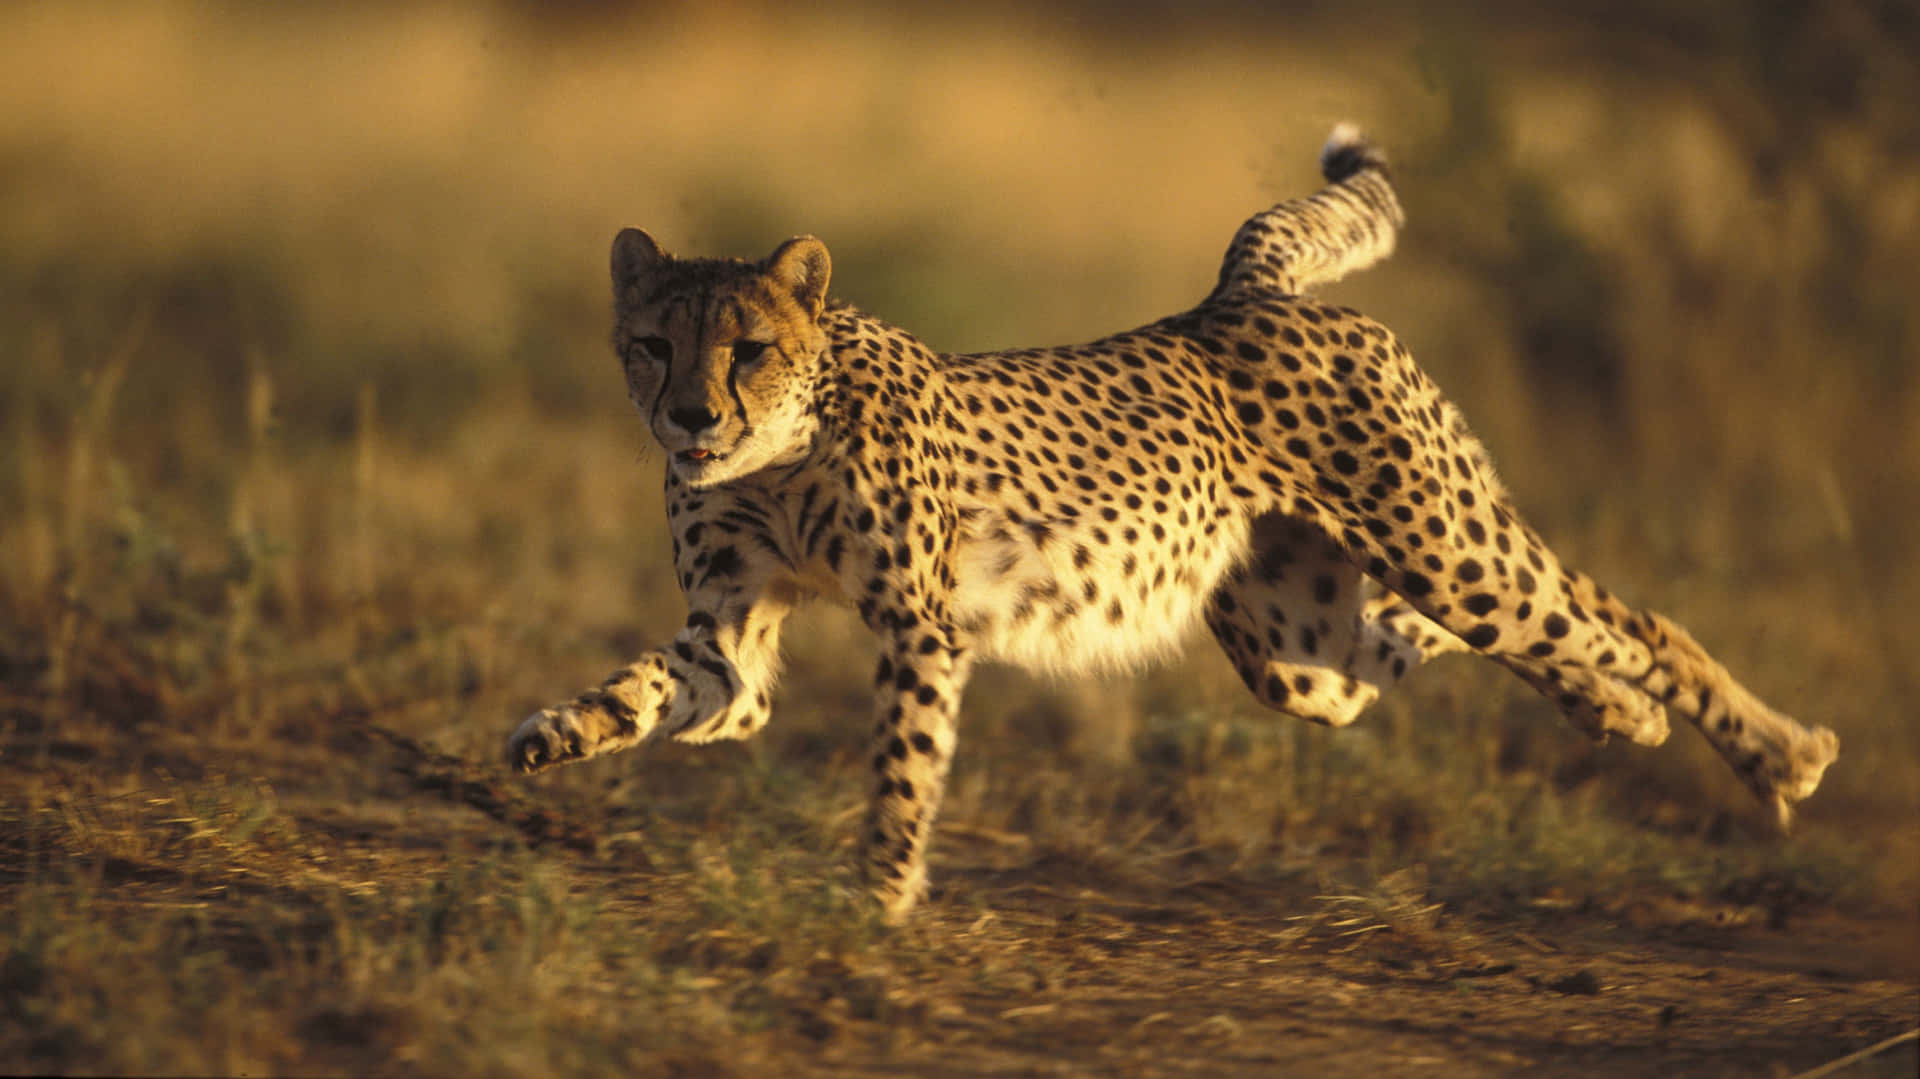 A Stunning Cheetah On The Hunt